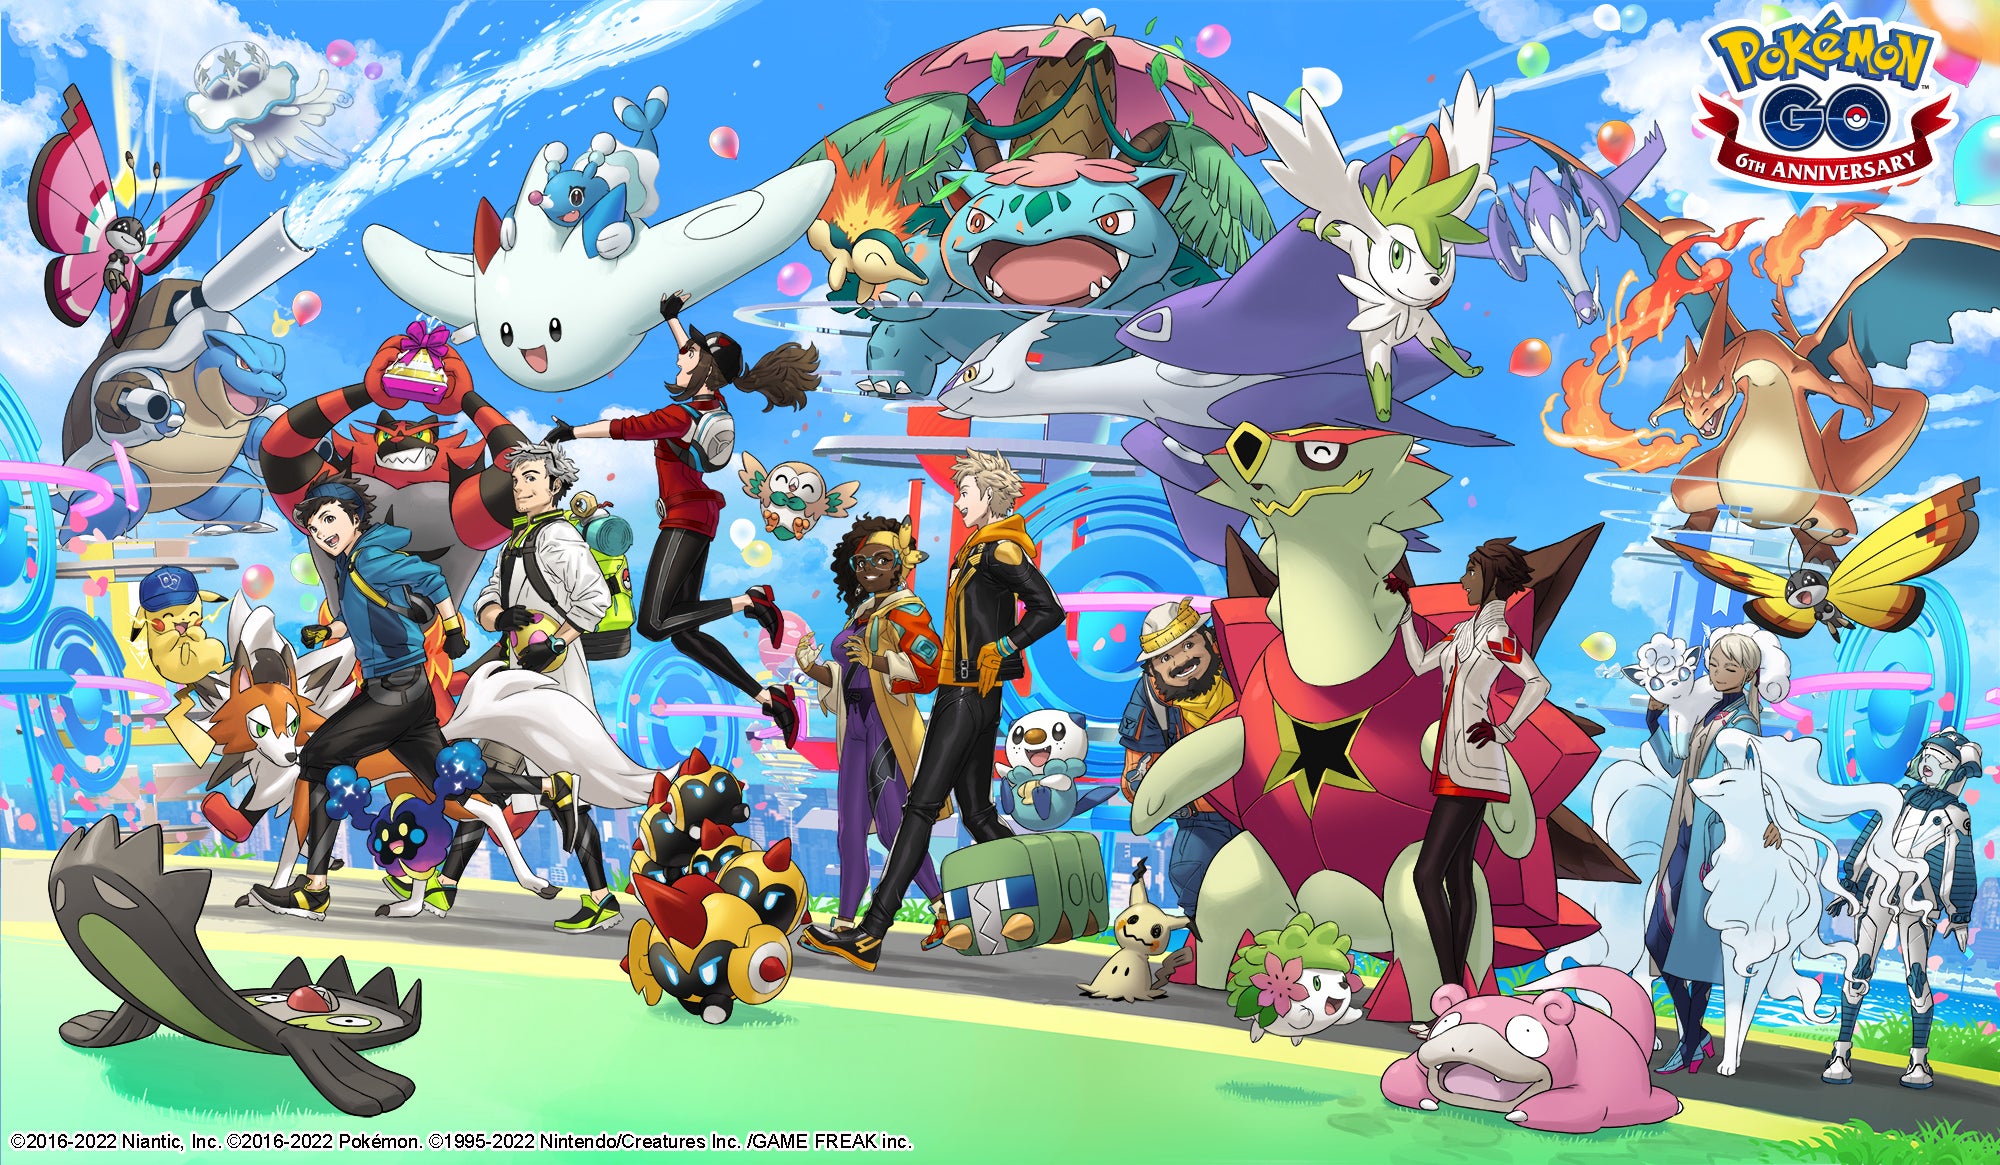 Pokémon Go sixth anniversary artwork.